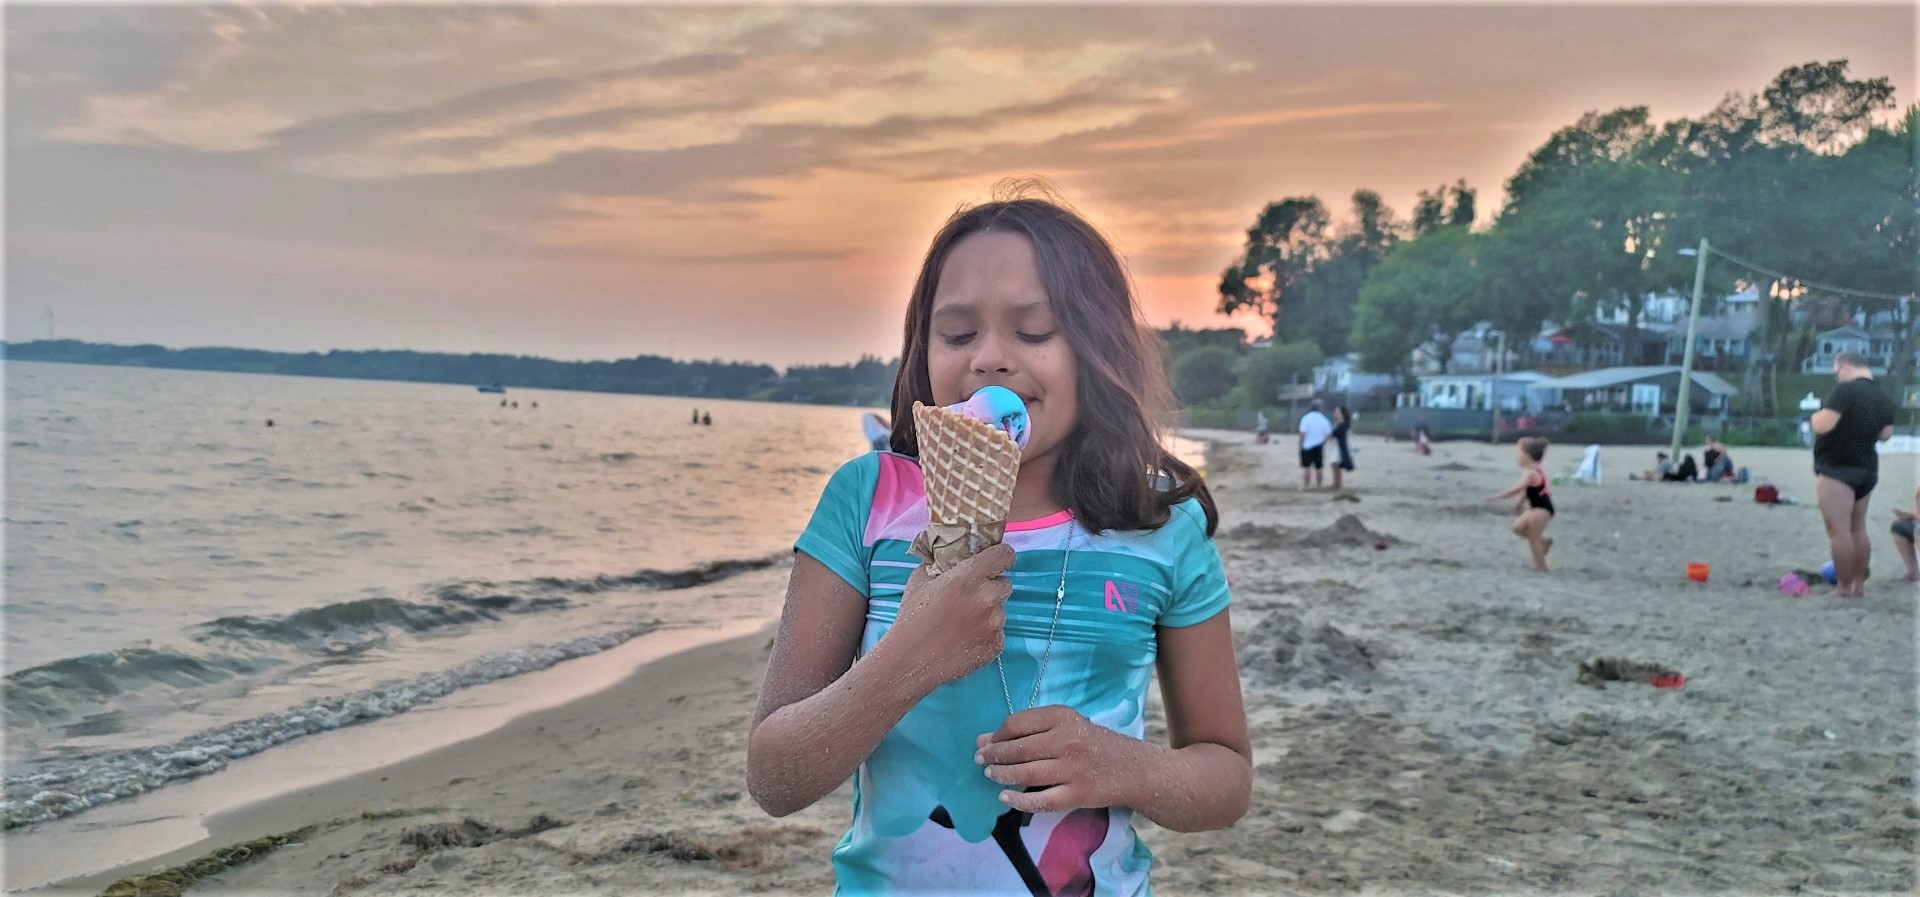 girl eating ice cream at beach